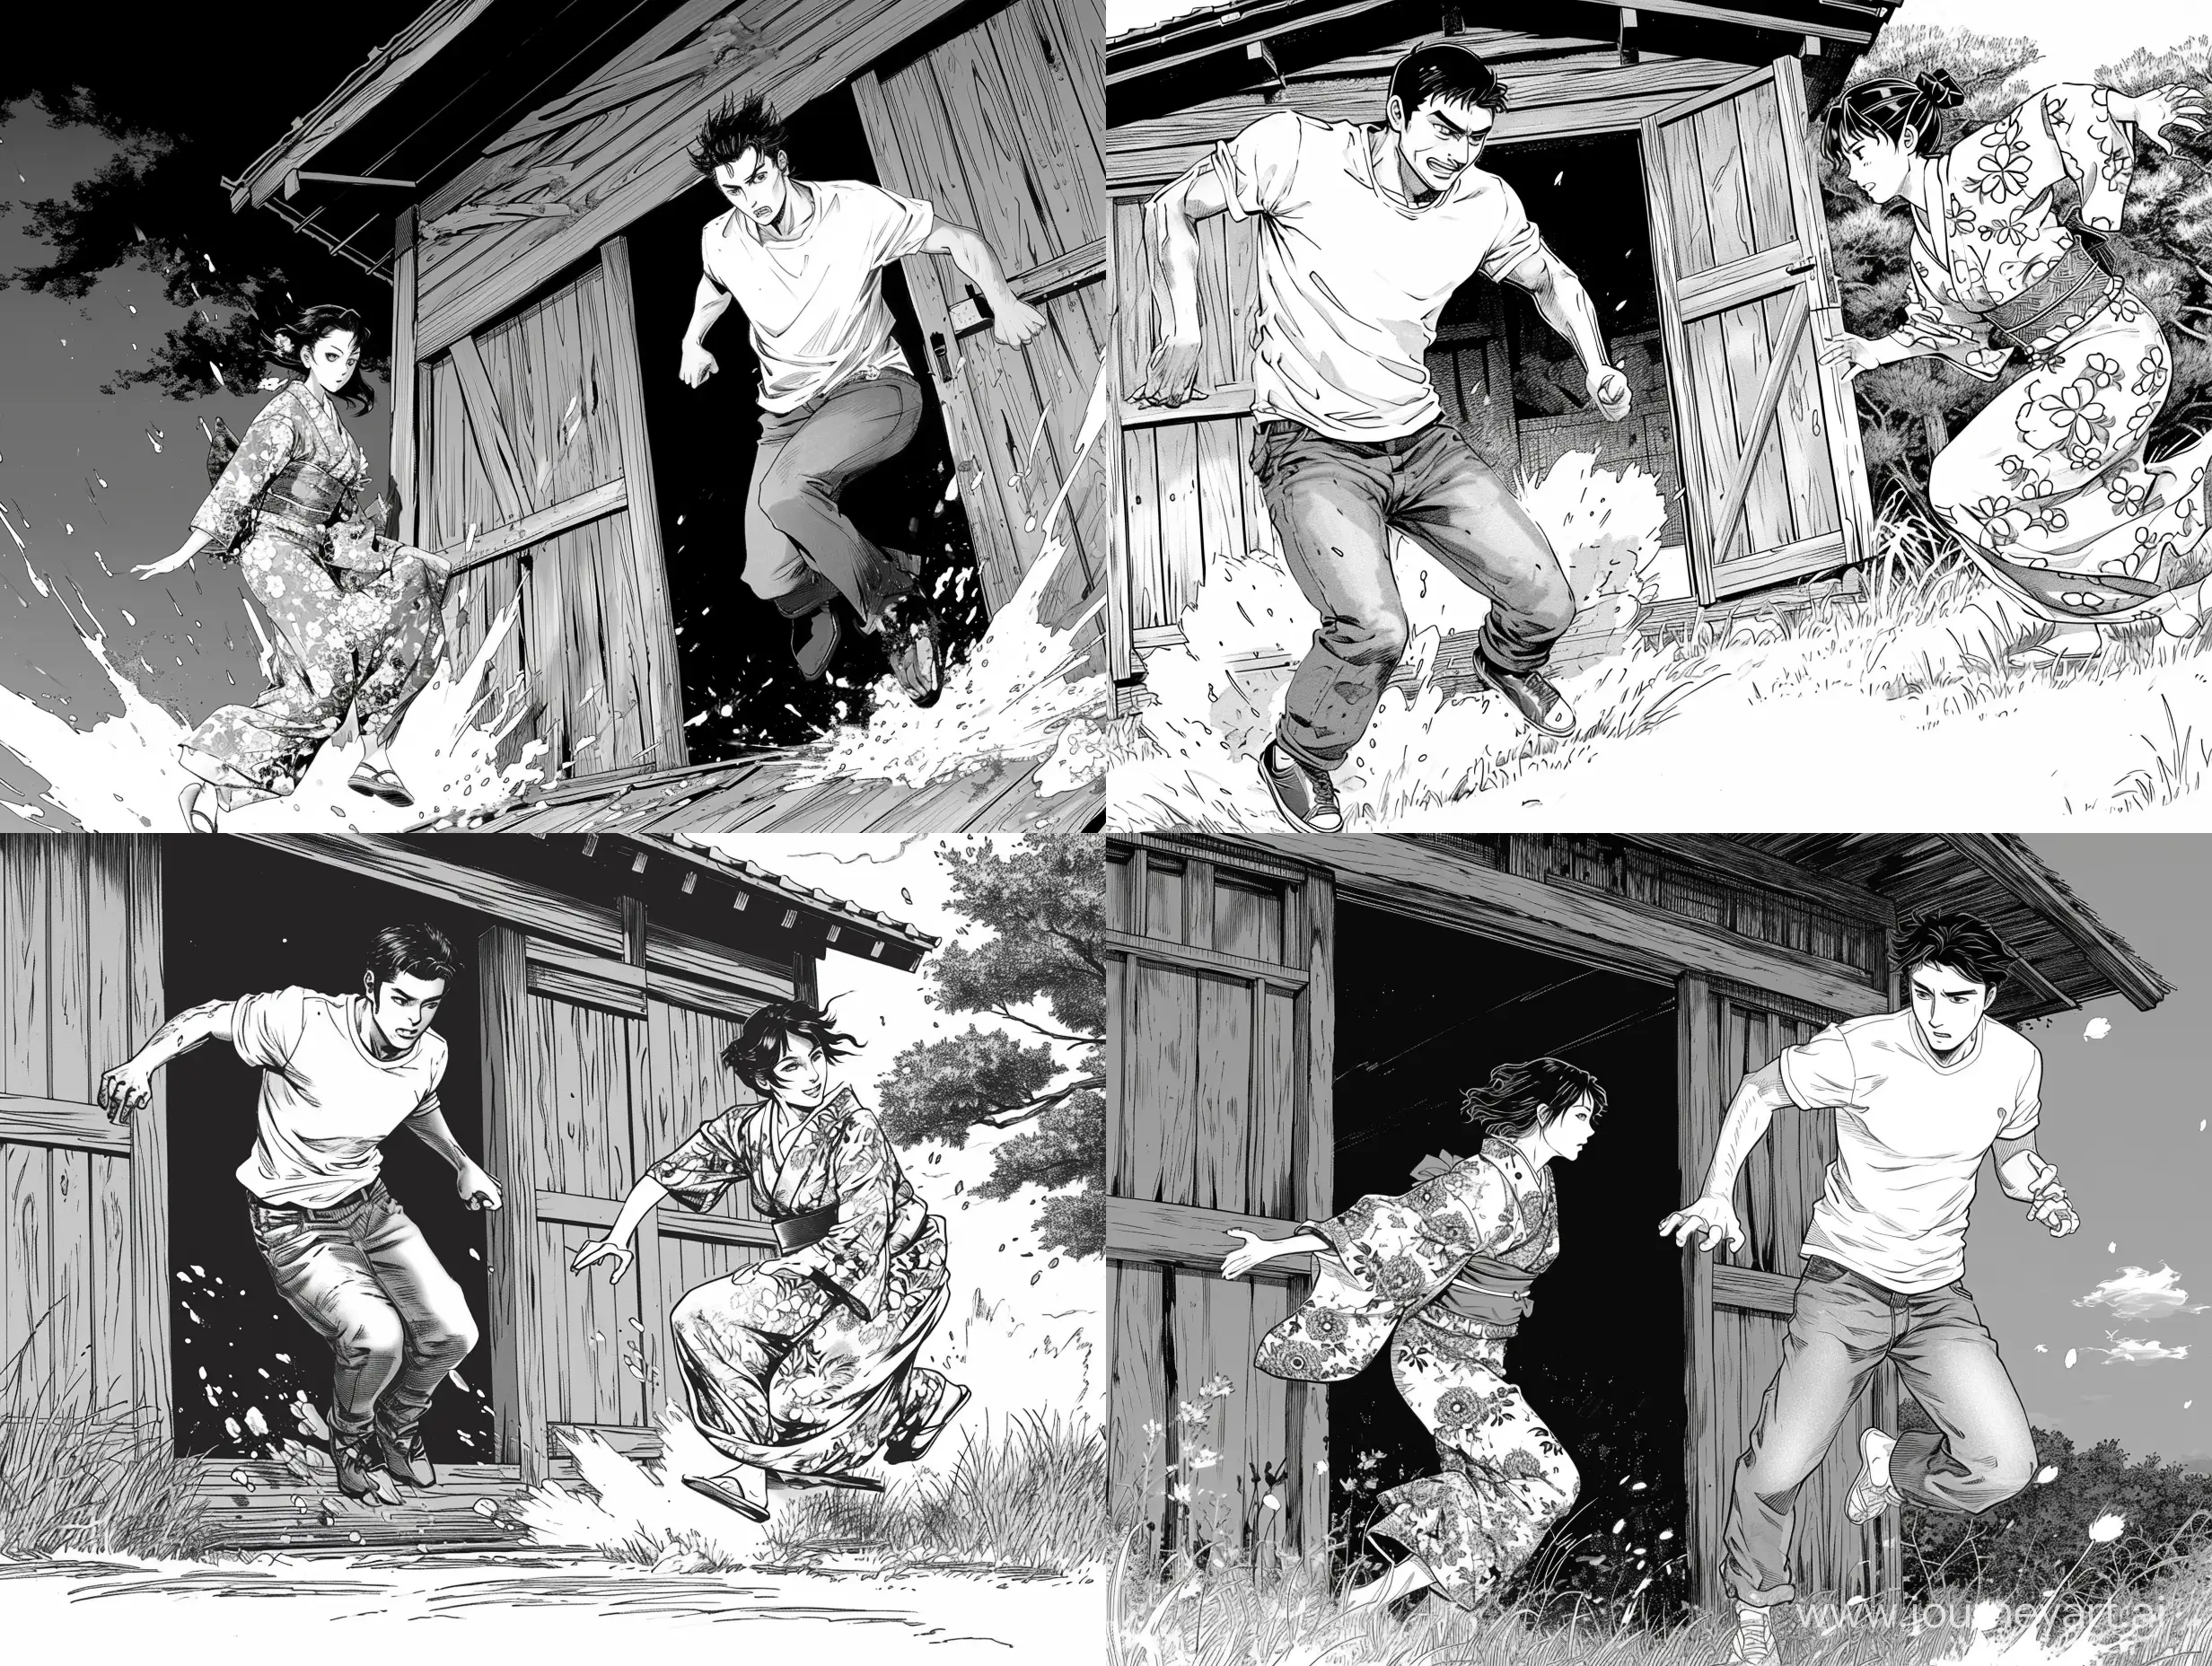 Wooden-Cabin-Collision-Manga-Panel-with-Man-in-Tshirt-and-Kimono-Clash